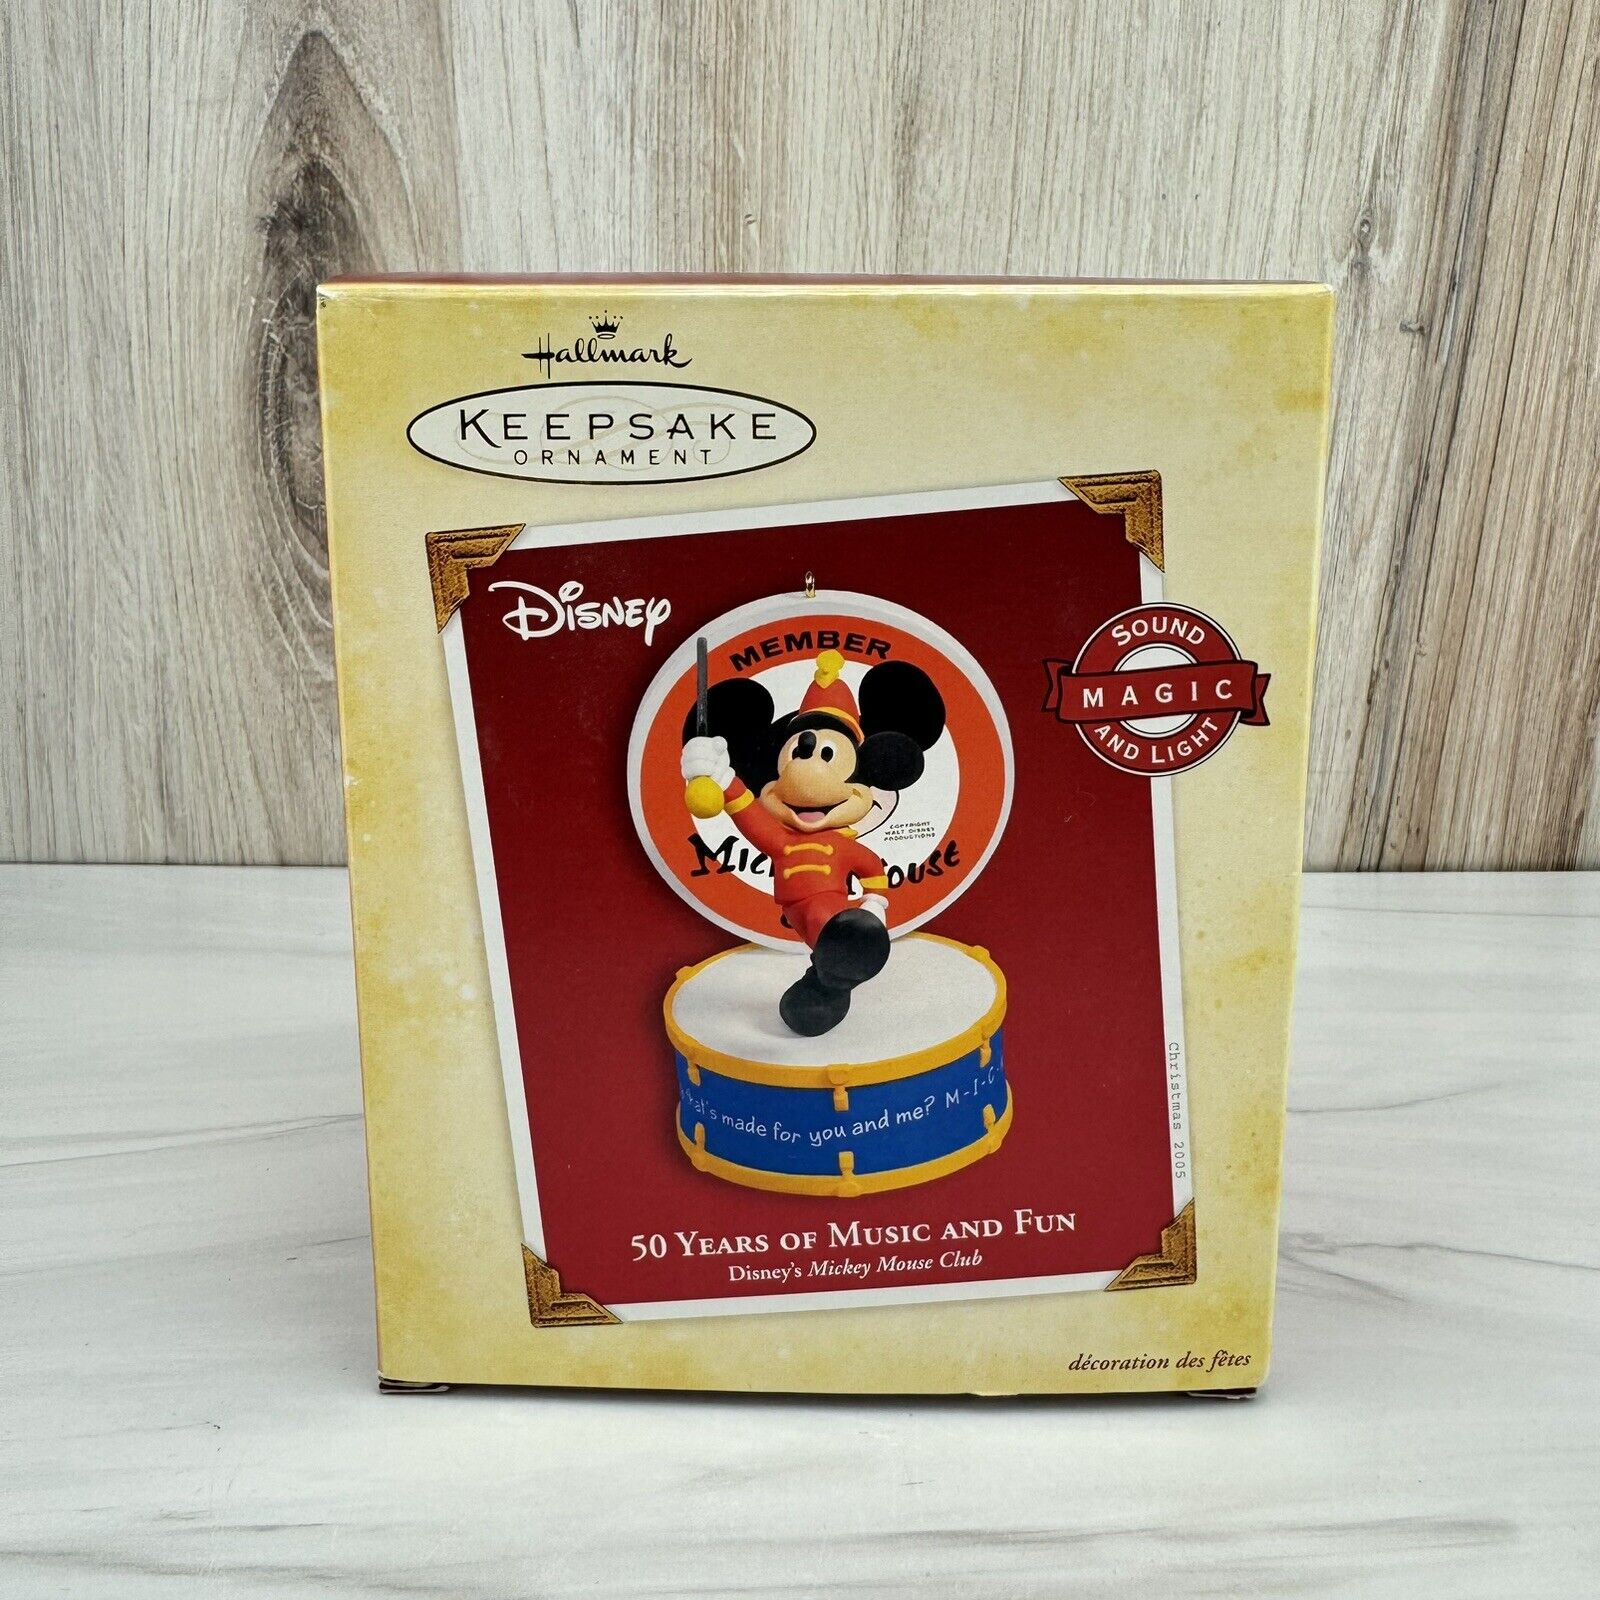 2005 Hallmark MAGIC Ornament 50 Years Of Music and Fun Disneys Mickey Mouse Club